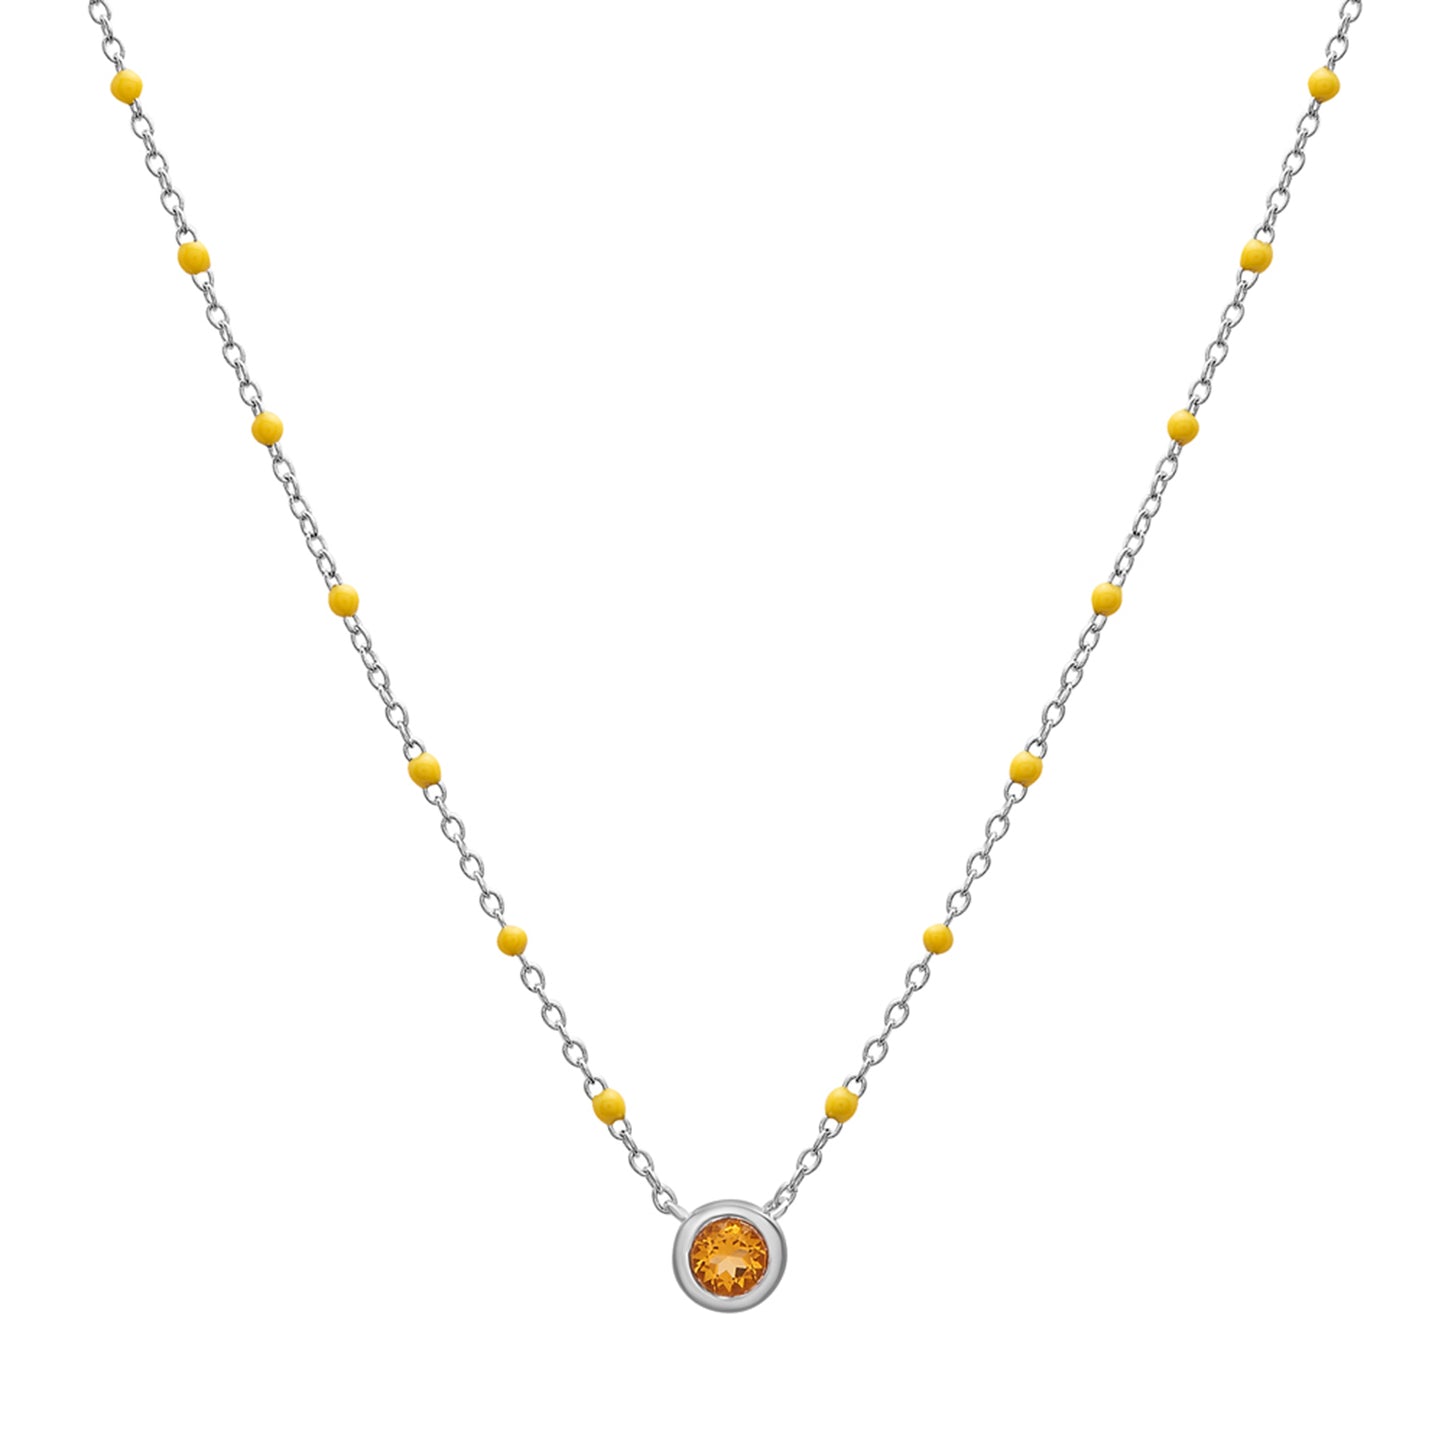 Birthstone Enamel Necklaces in Yellow stone